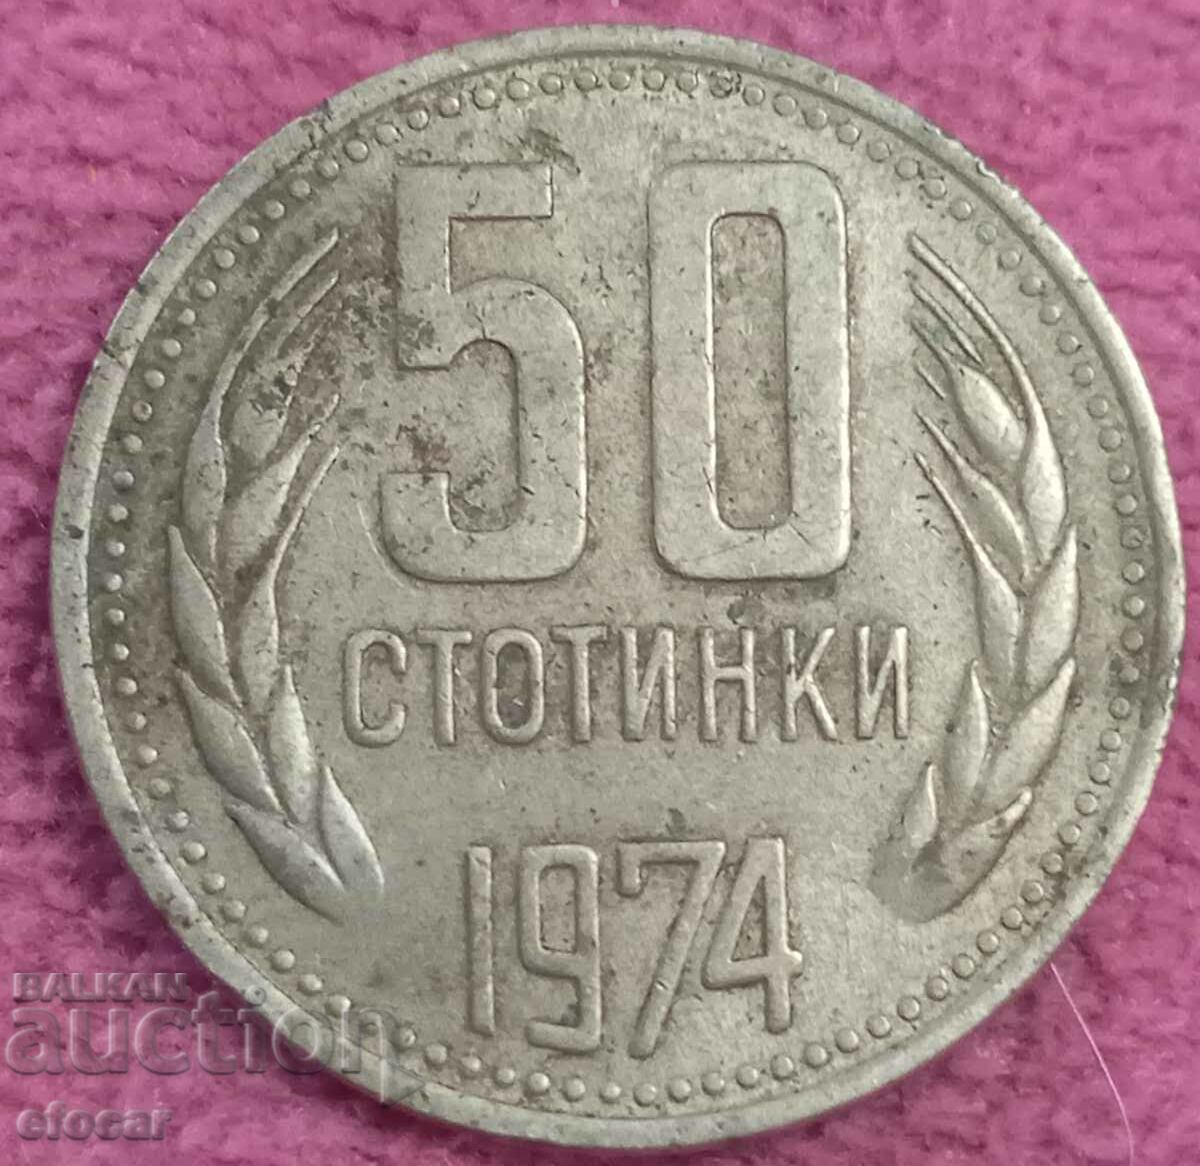 50 стотинки България 1974